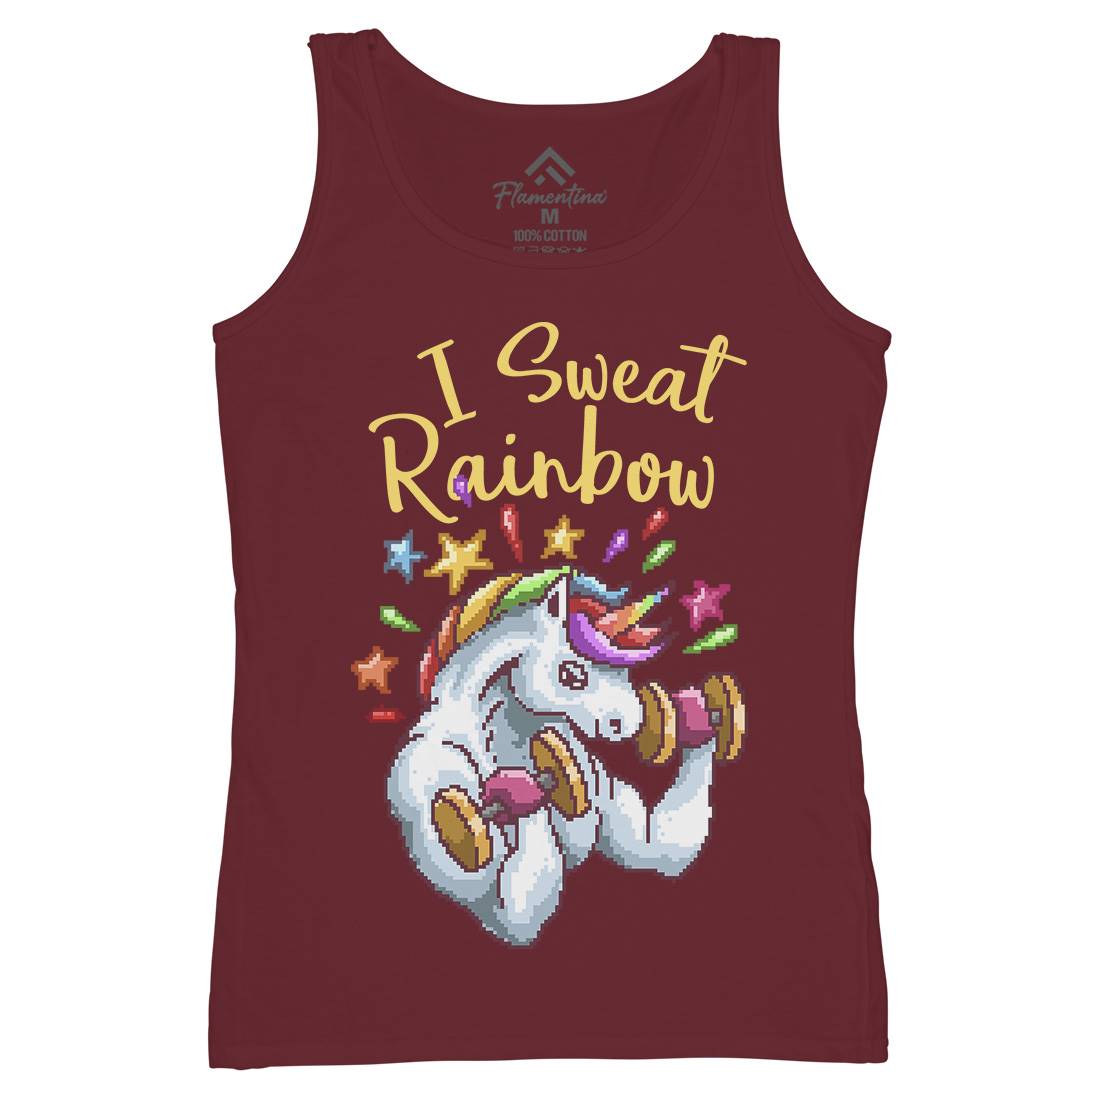 I Sweat Rainbow Womens Organic Tank Top Vest Retro B916